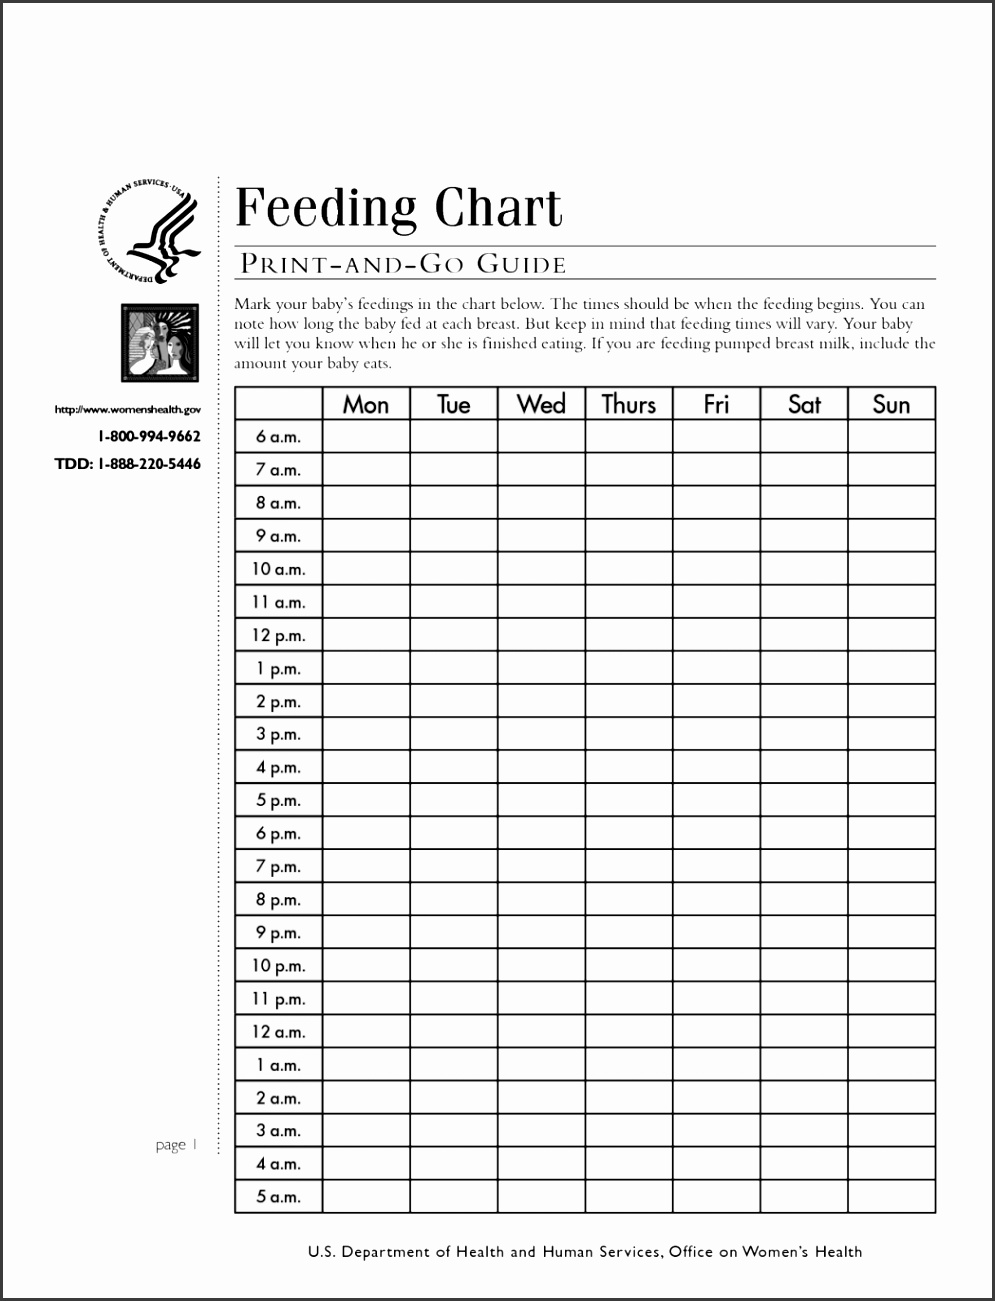 6 Baby Feeding Chart Template - SampleTemplatess ...